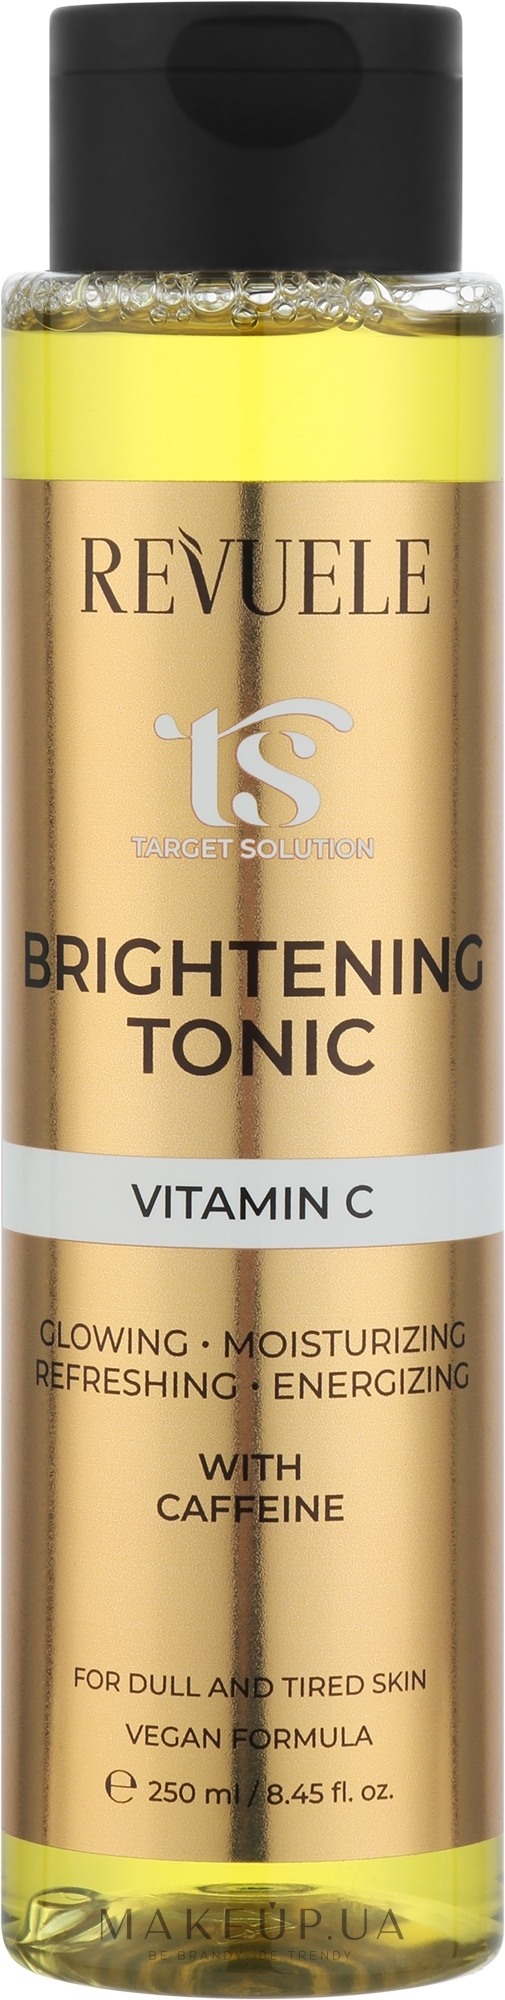 Осветляющий тоник с витамином С - Revuele Target Solution Brightening Tonic — фото 250ml